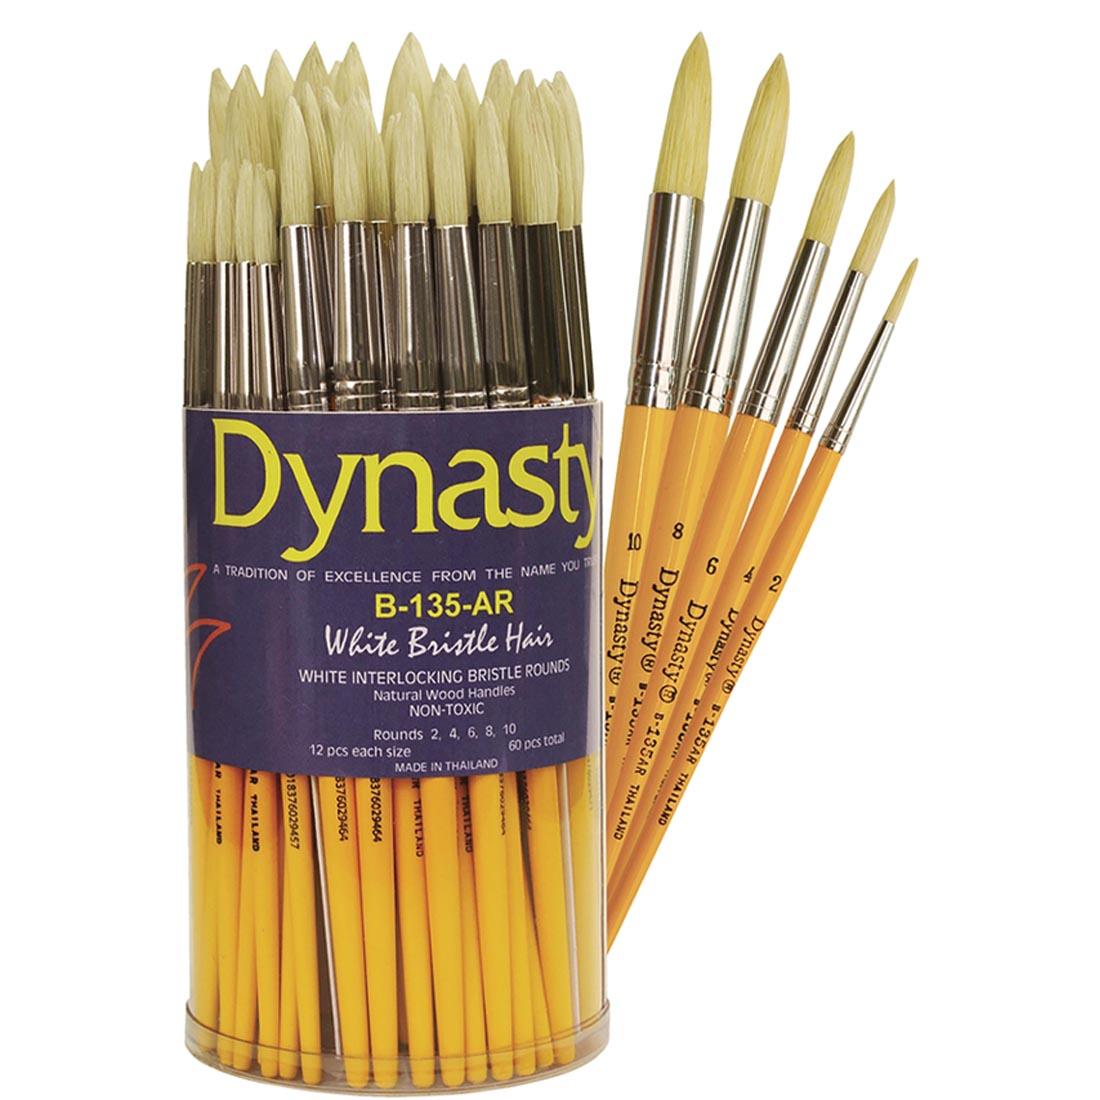 Dynasty White Bristle Round Brush Set in a Tub